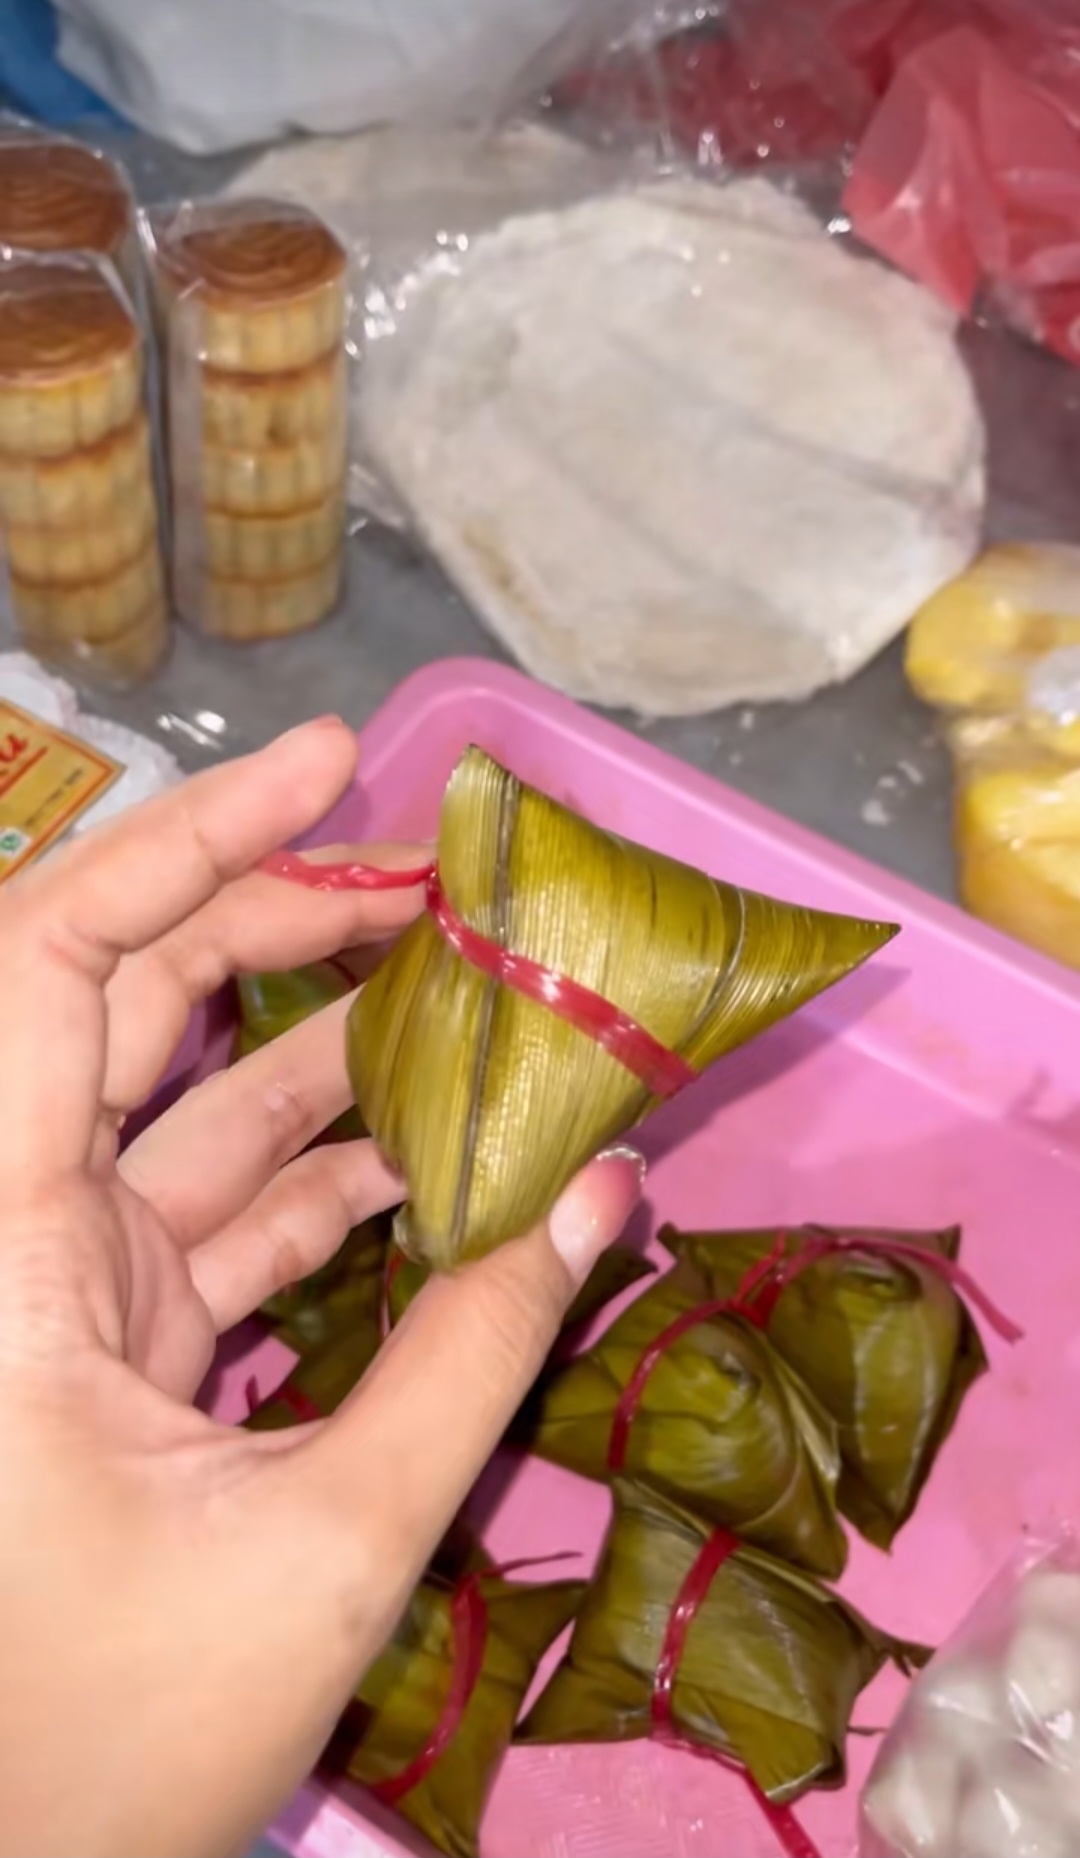 Sedang Viral, Ini Dia Tempat Makan Bakcang di Kota Bengkulu yang Legend dan Dijamin Halal